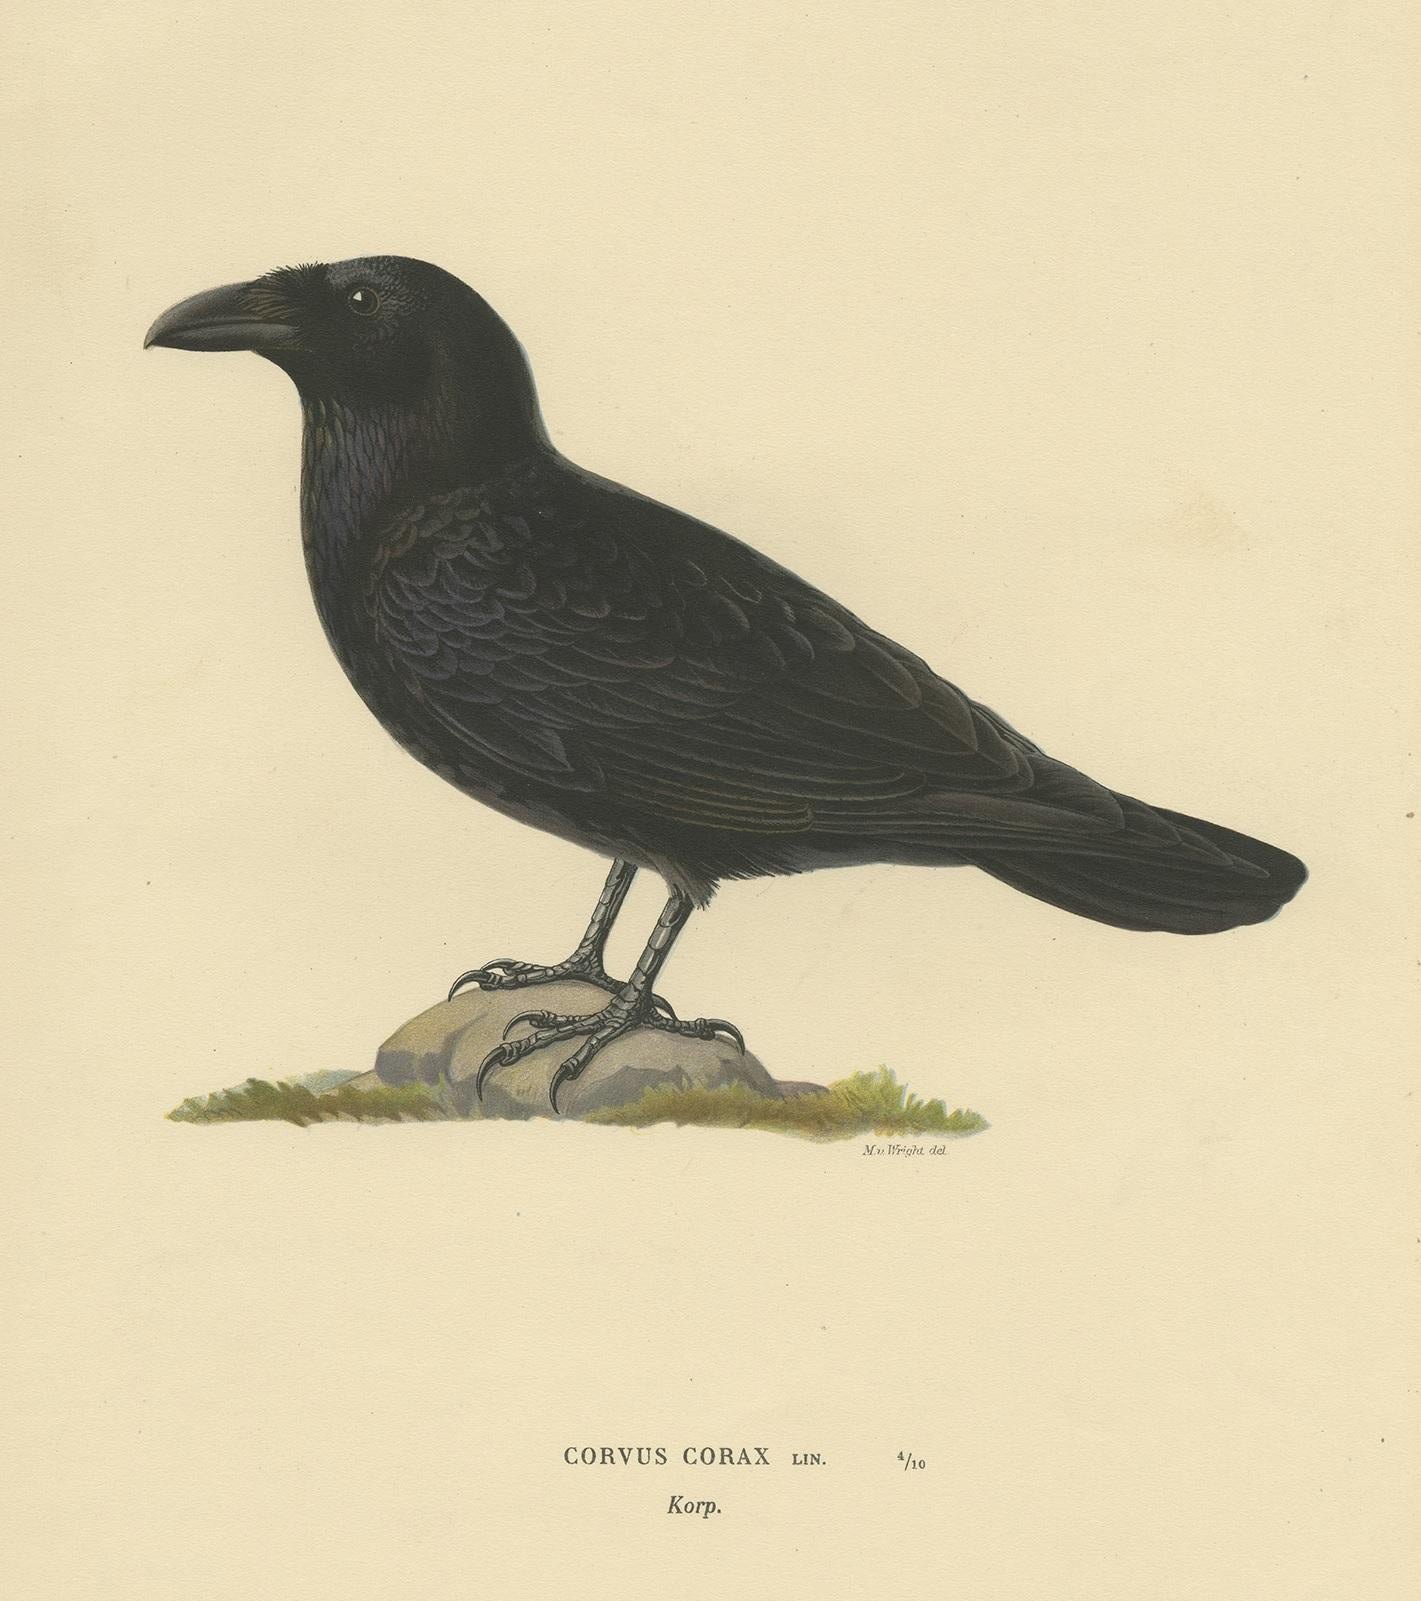 Antique bird print titled 'Corvus Corax'. Old bird print depicting the common raven. This print originates from 'Svenska Foglar Efter Naturen Och Pa Stenritade' by Magnus von Wright.